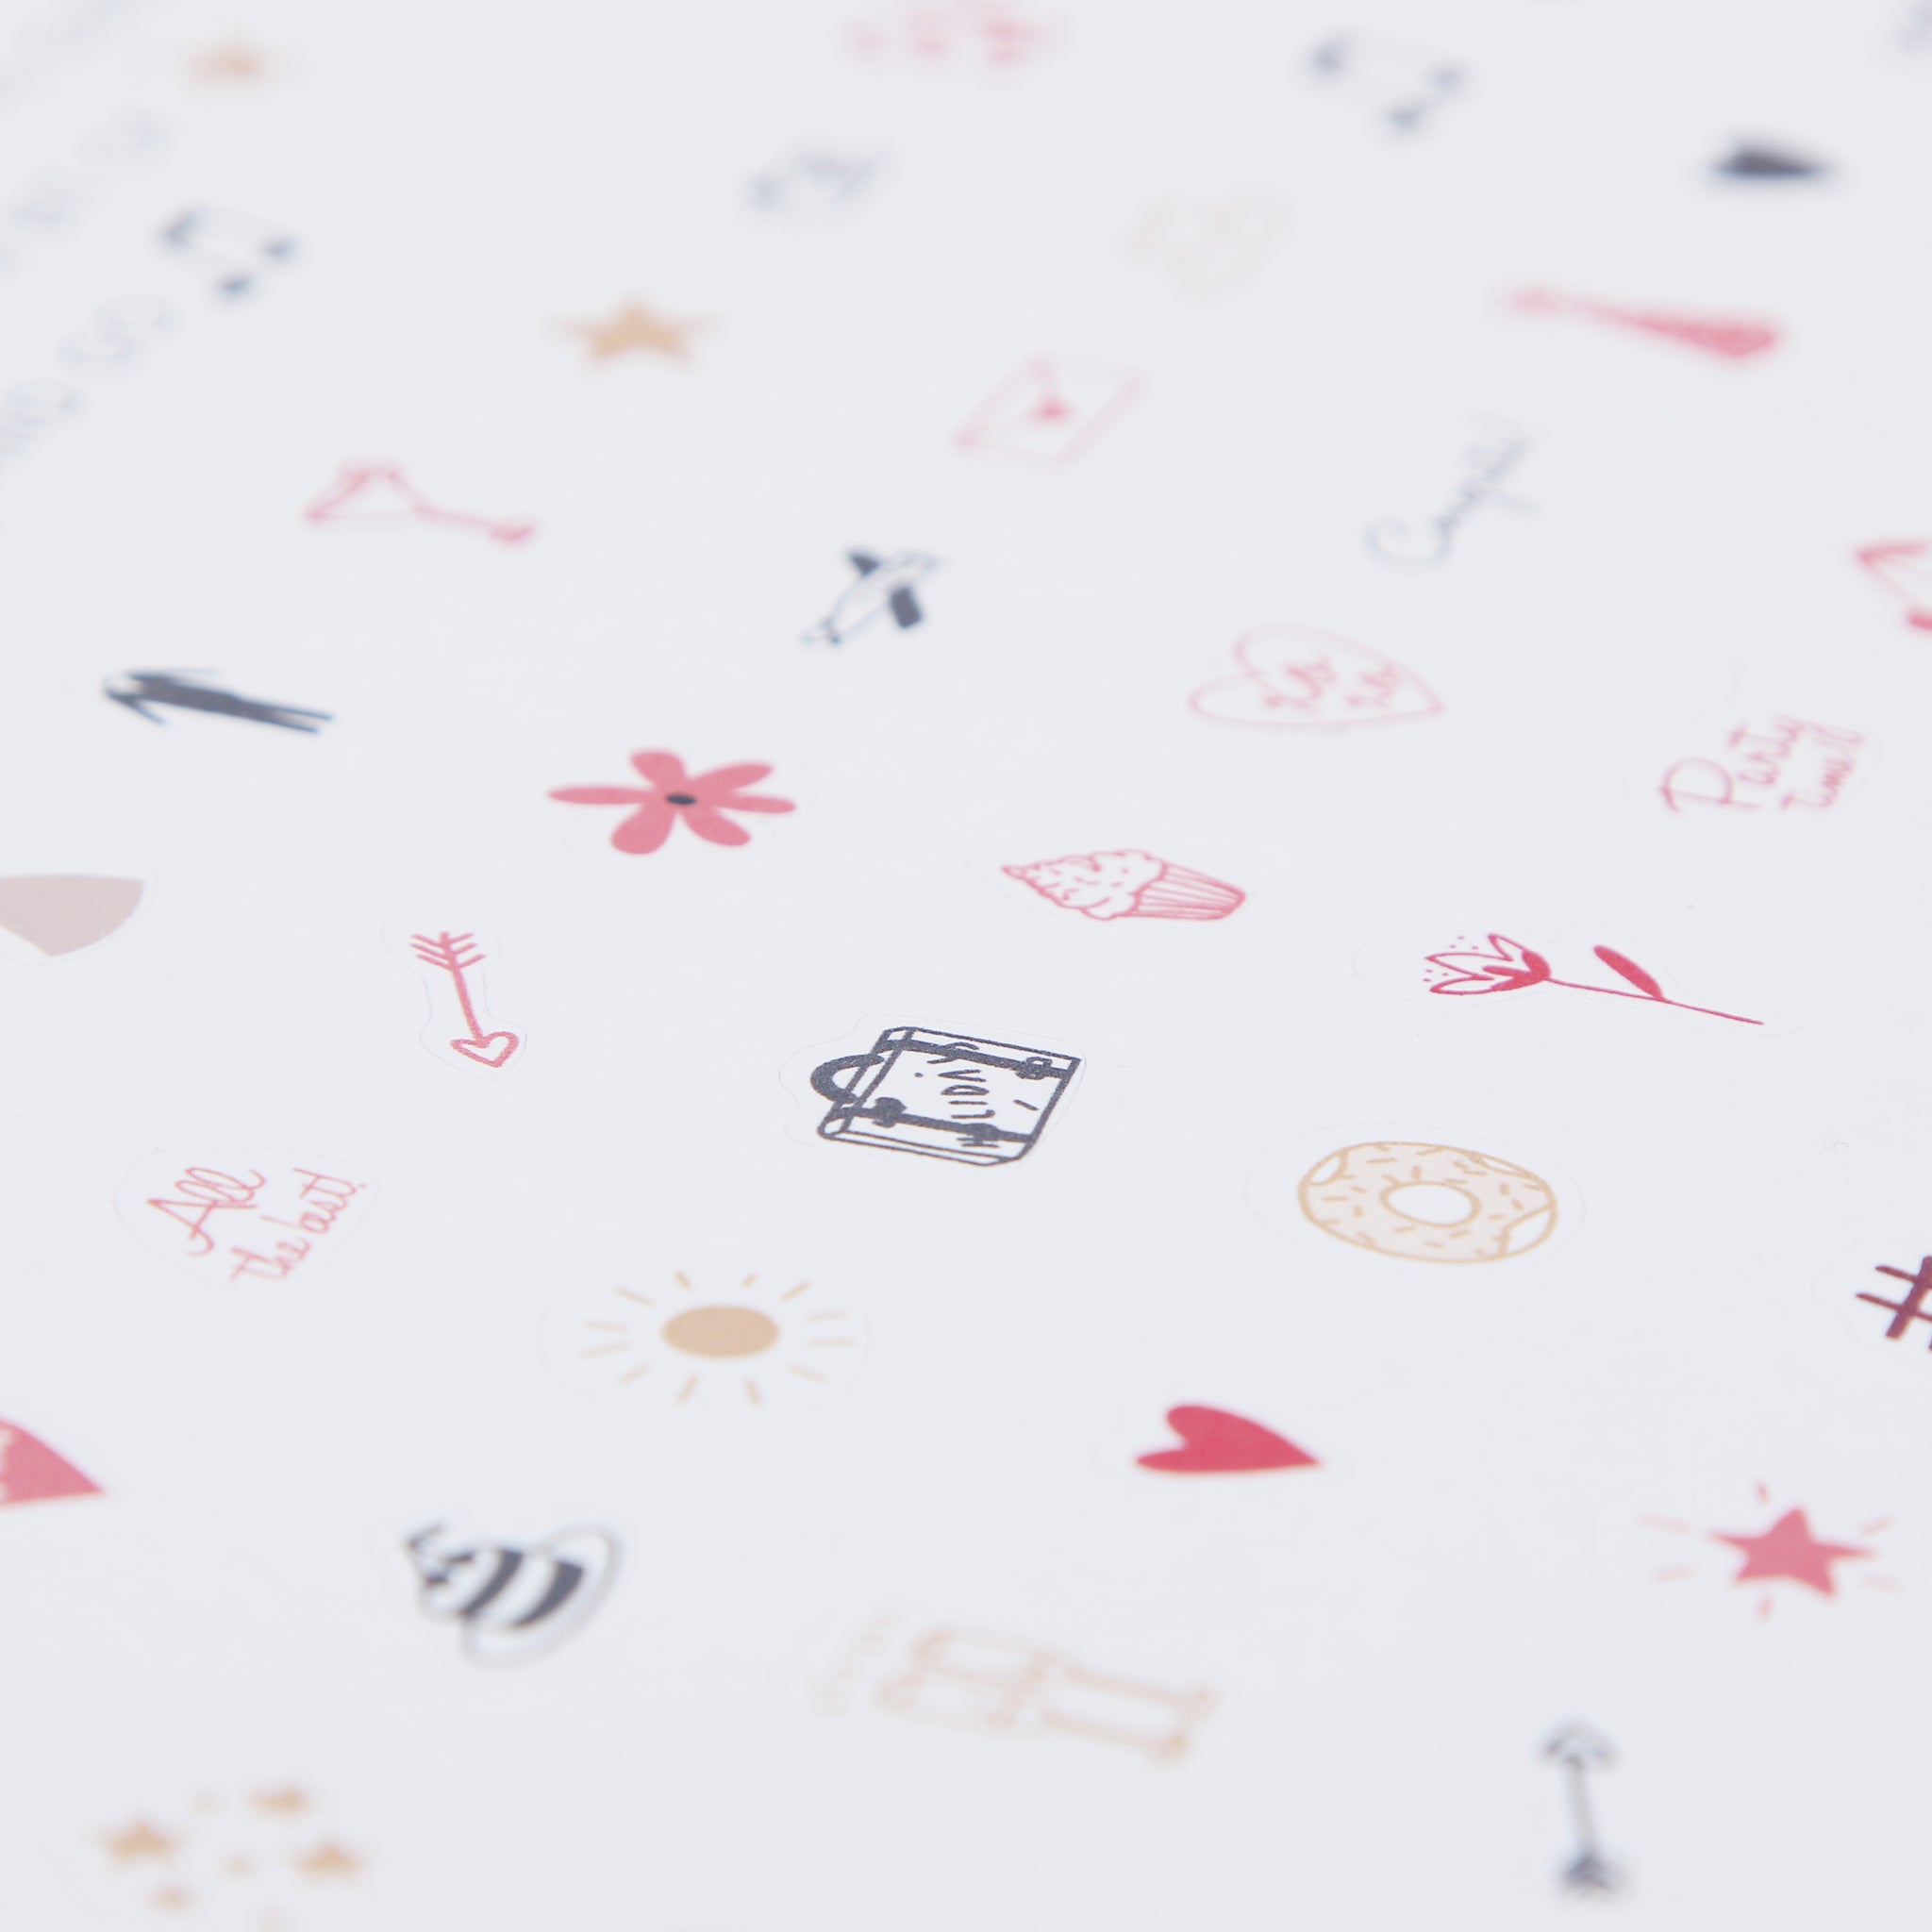 Stickers Emojis for the Wedding Guesbook, Cream Red Tones by Liumy - Liumy 